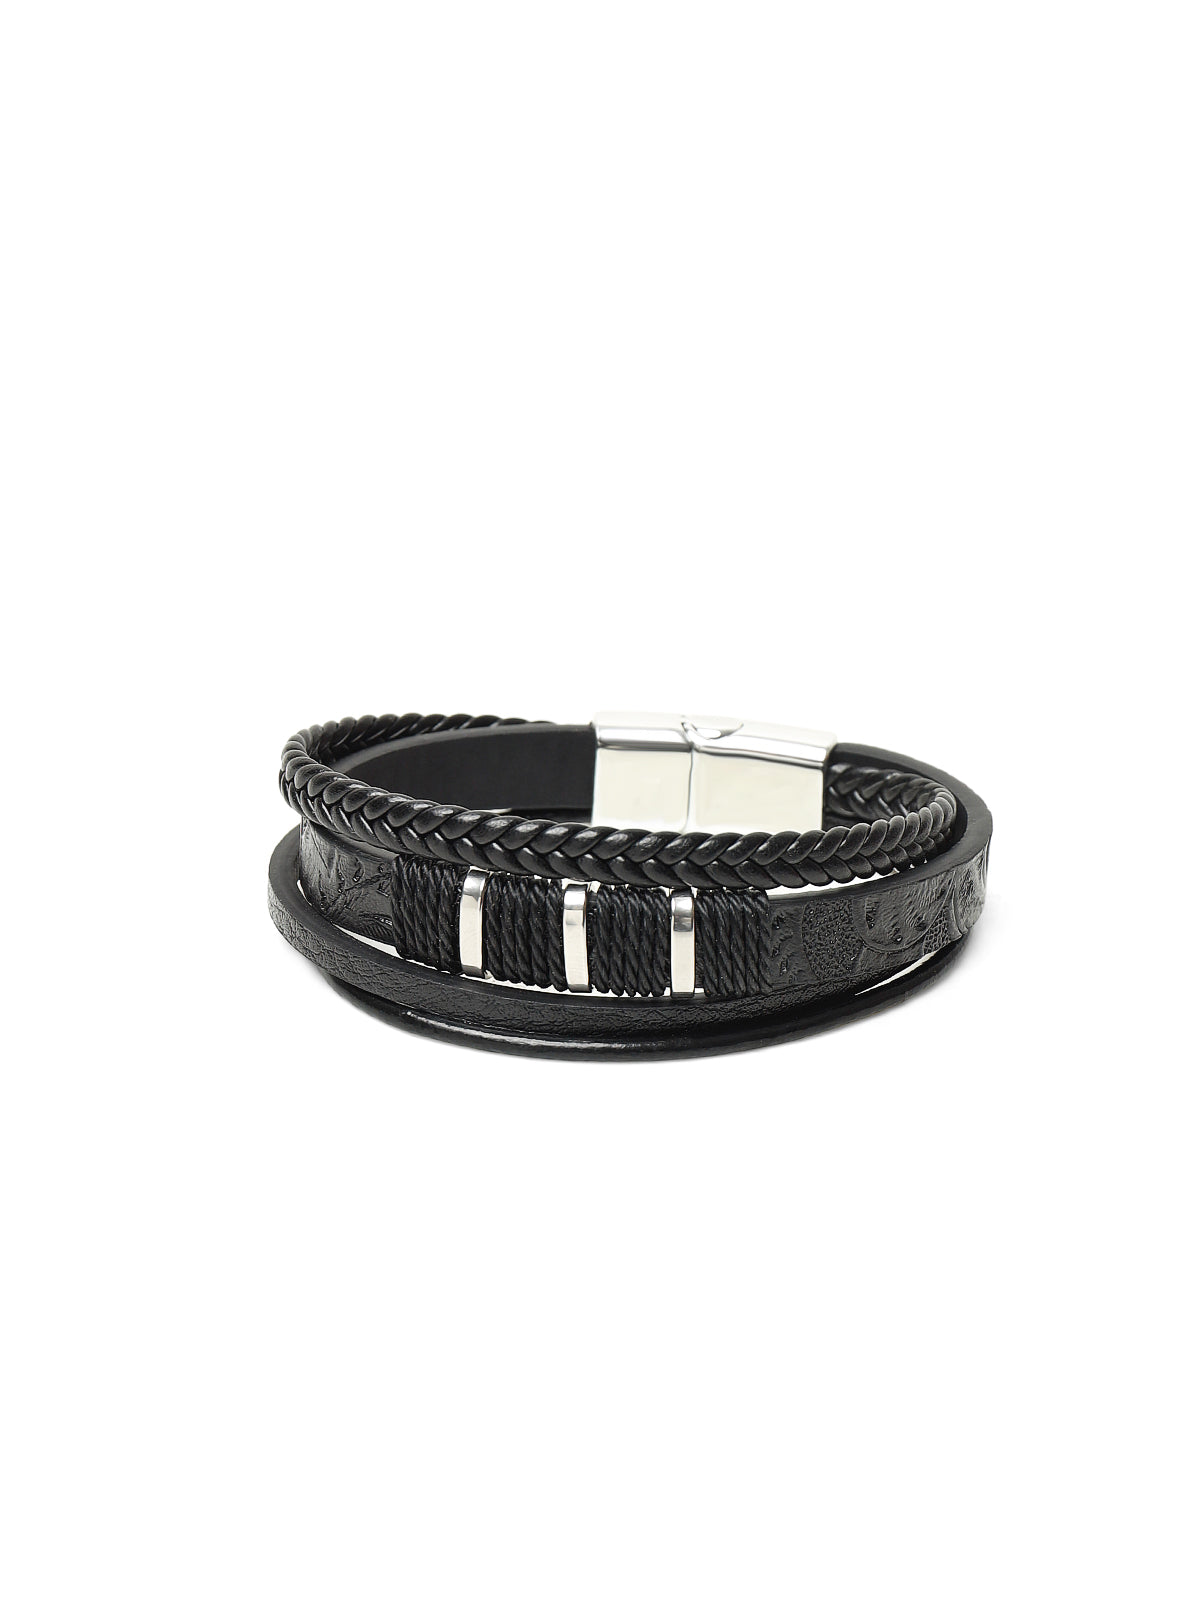 Black Leather Bracelet - FABR24-021